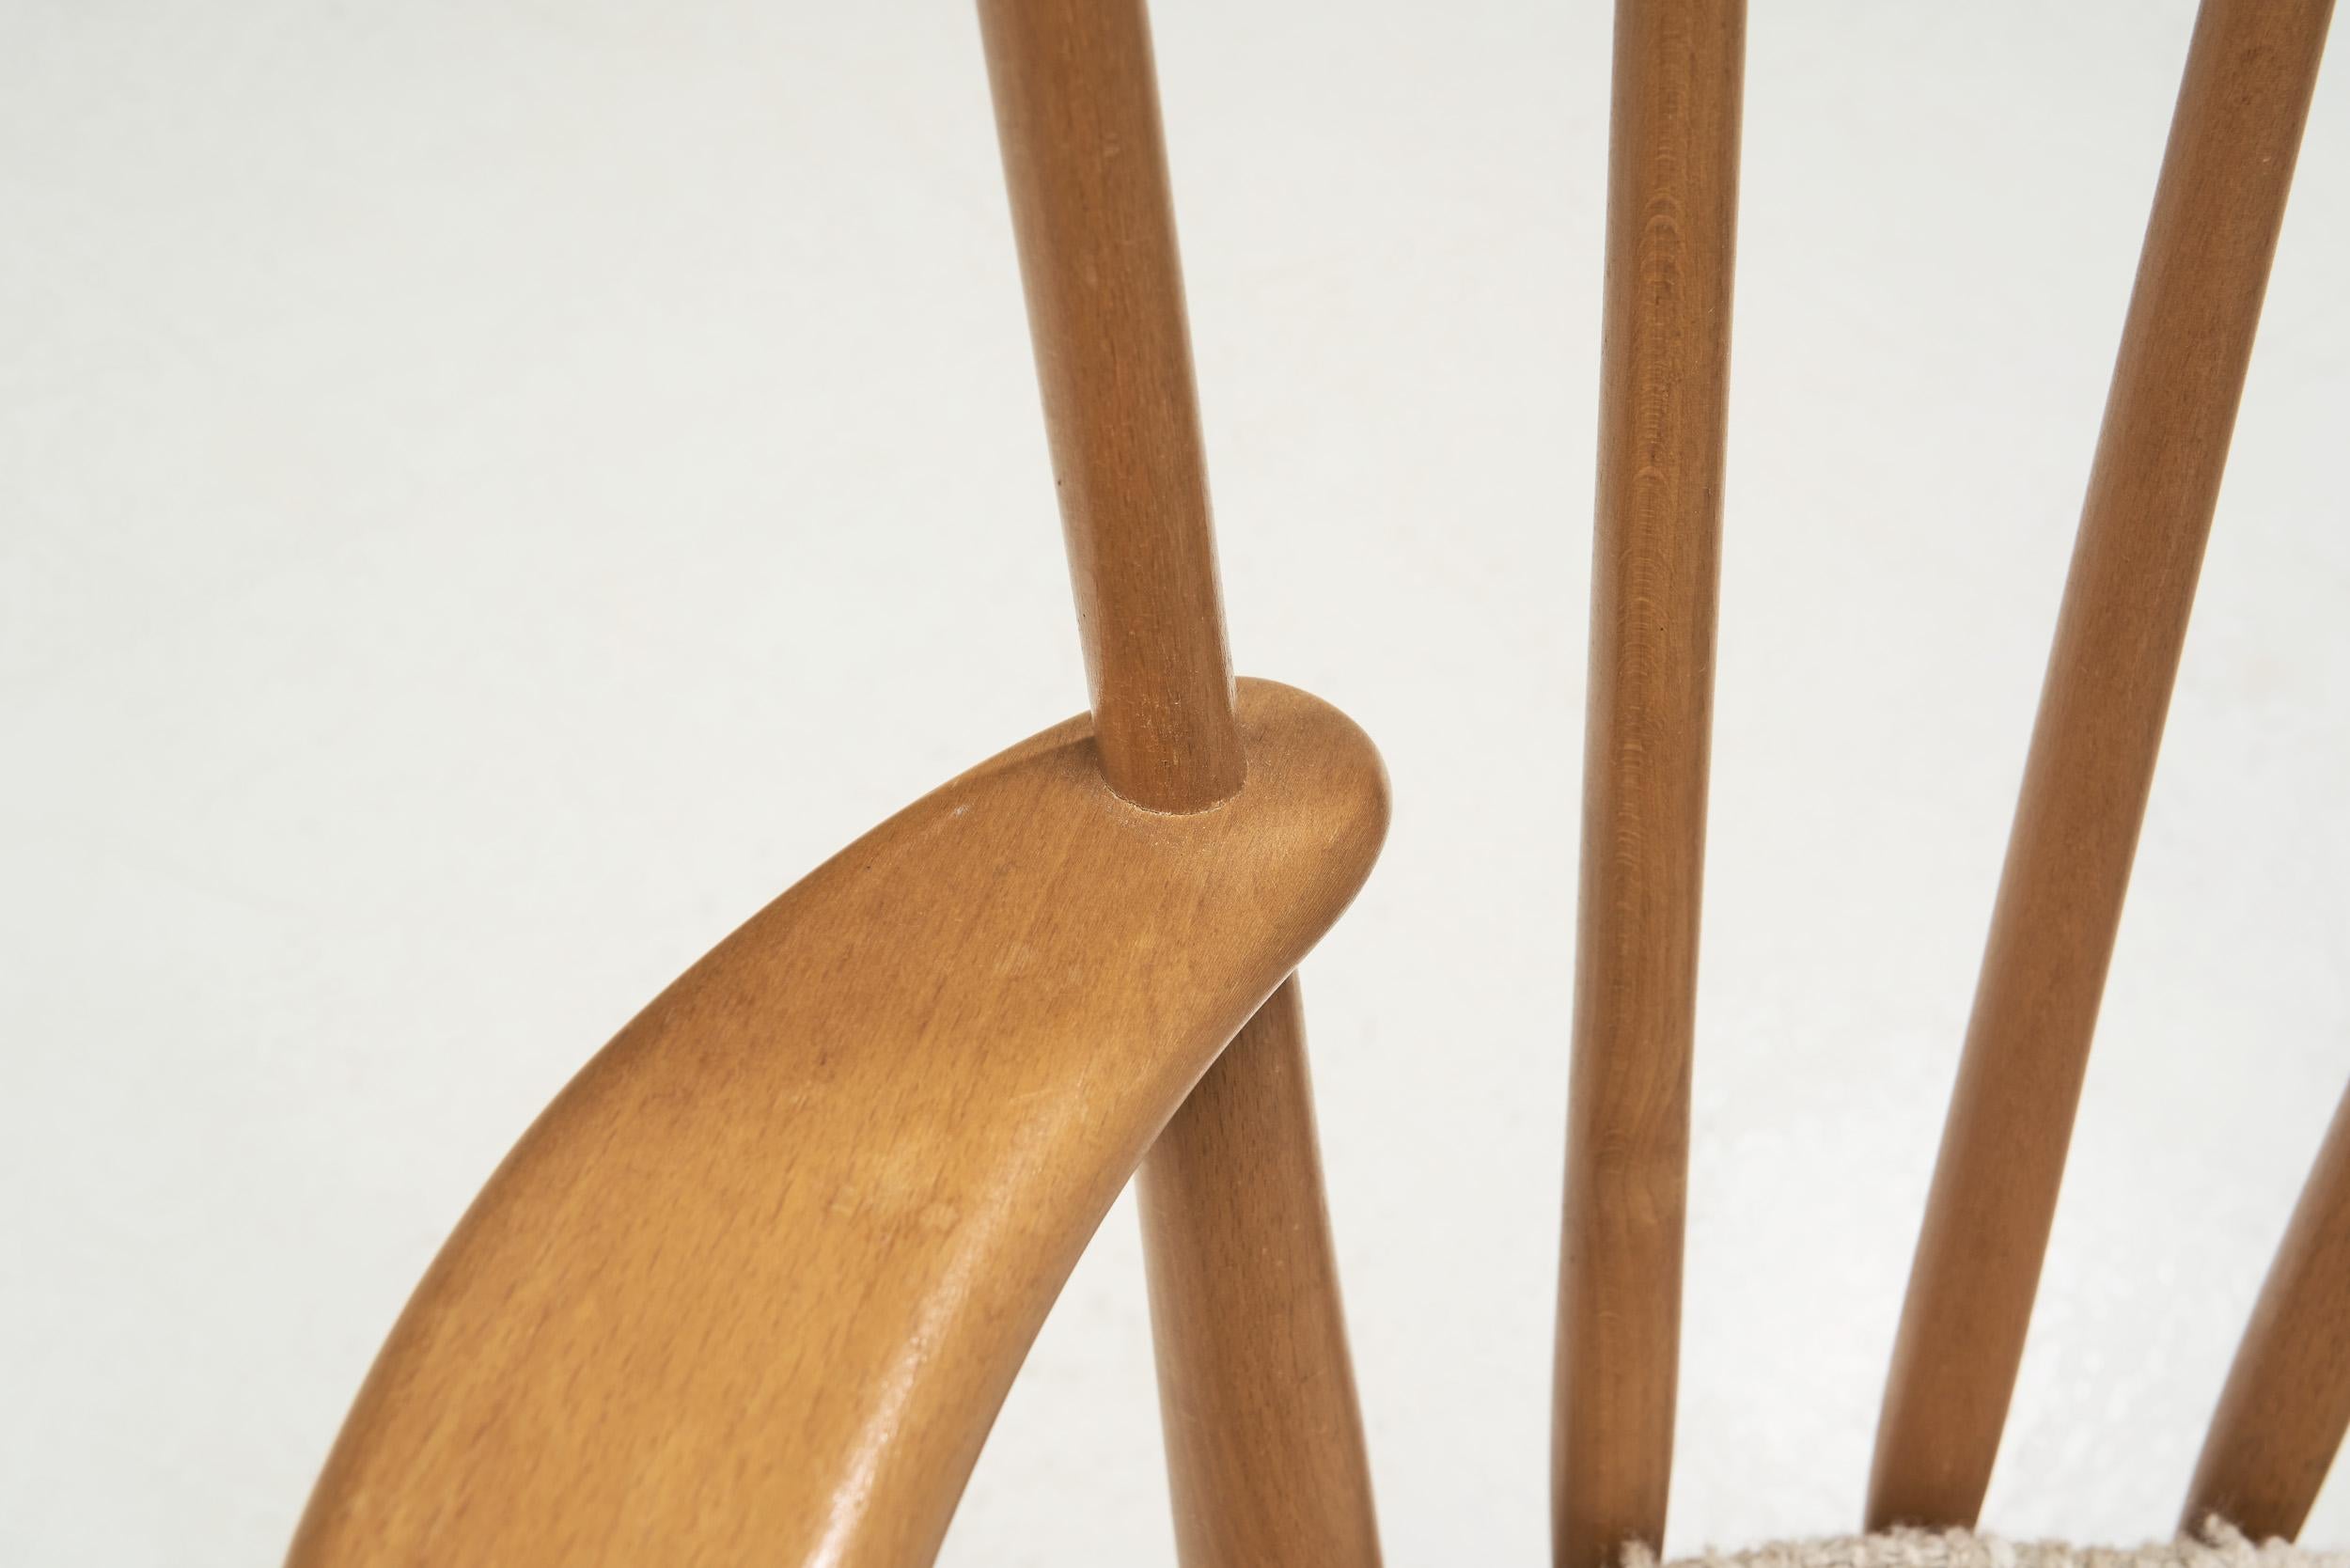 Beech Slatback Chairs by Børge Mogensen for FDB Møbler, Denmark 1960s For Sale 3